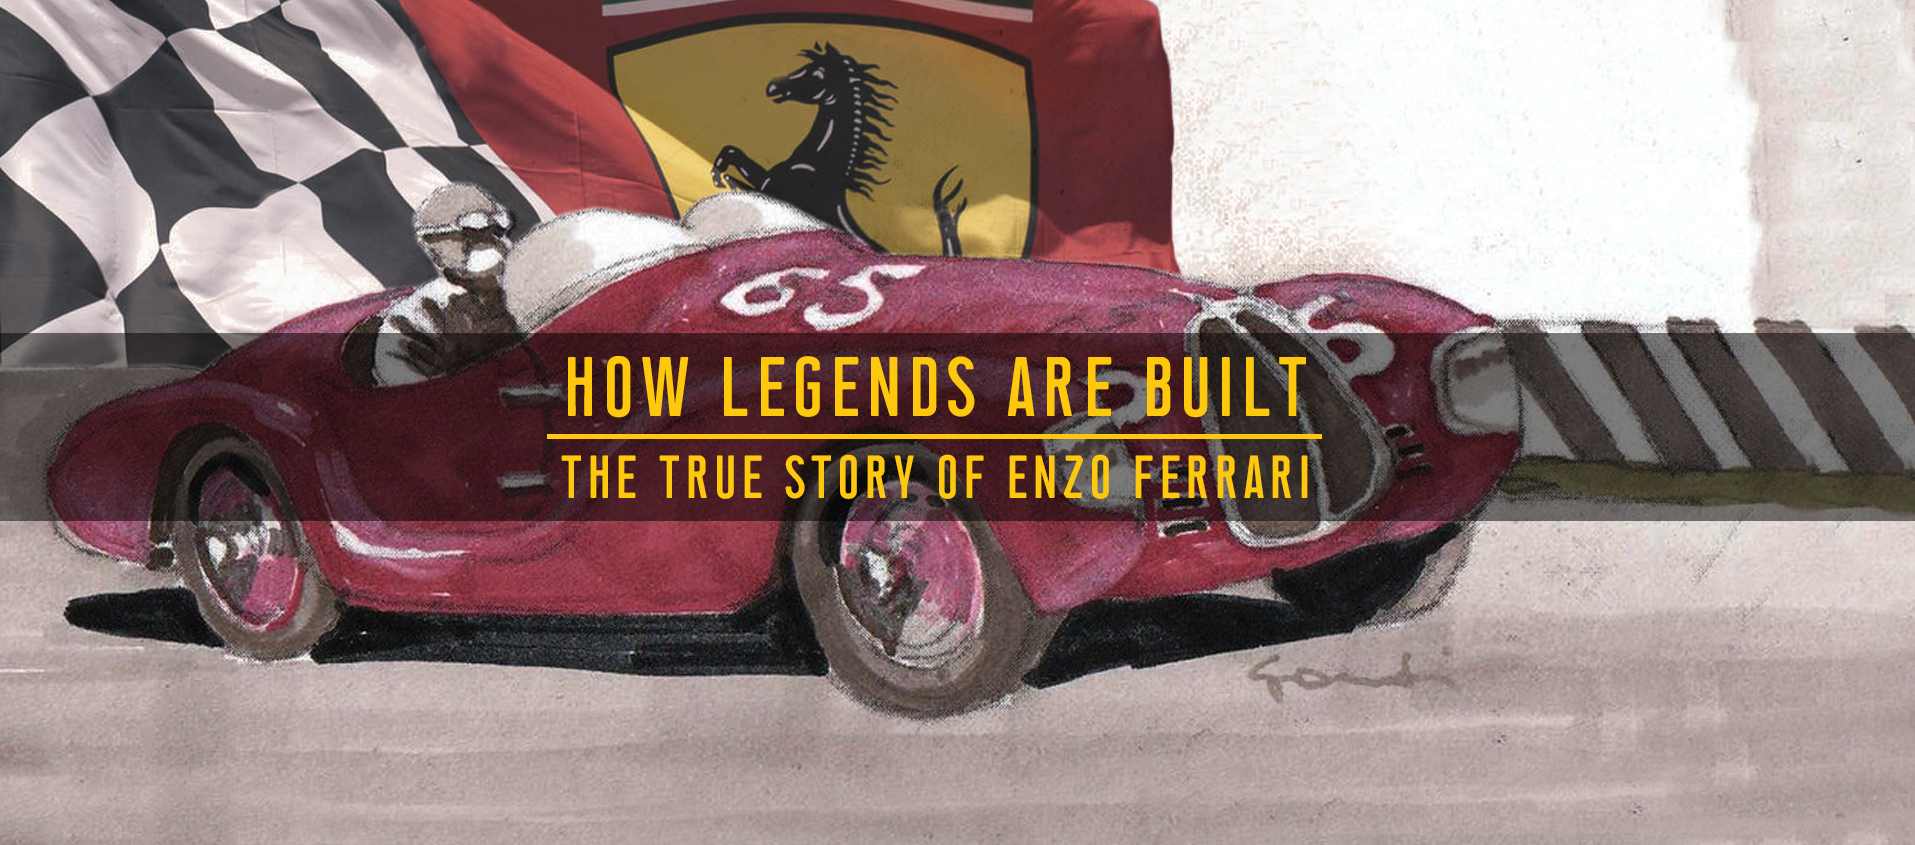 How legends are built: the true story of Enzo Ferrari